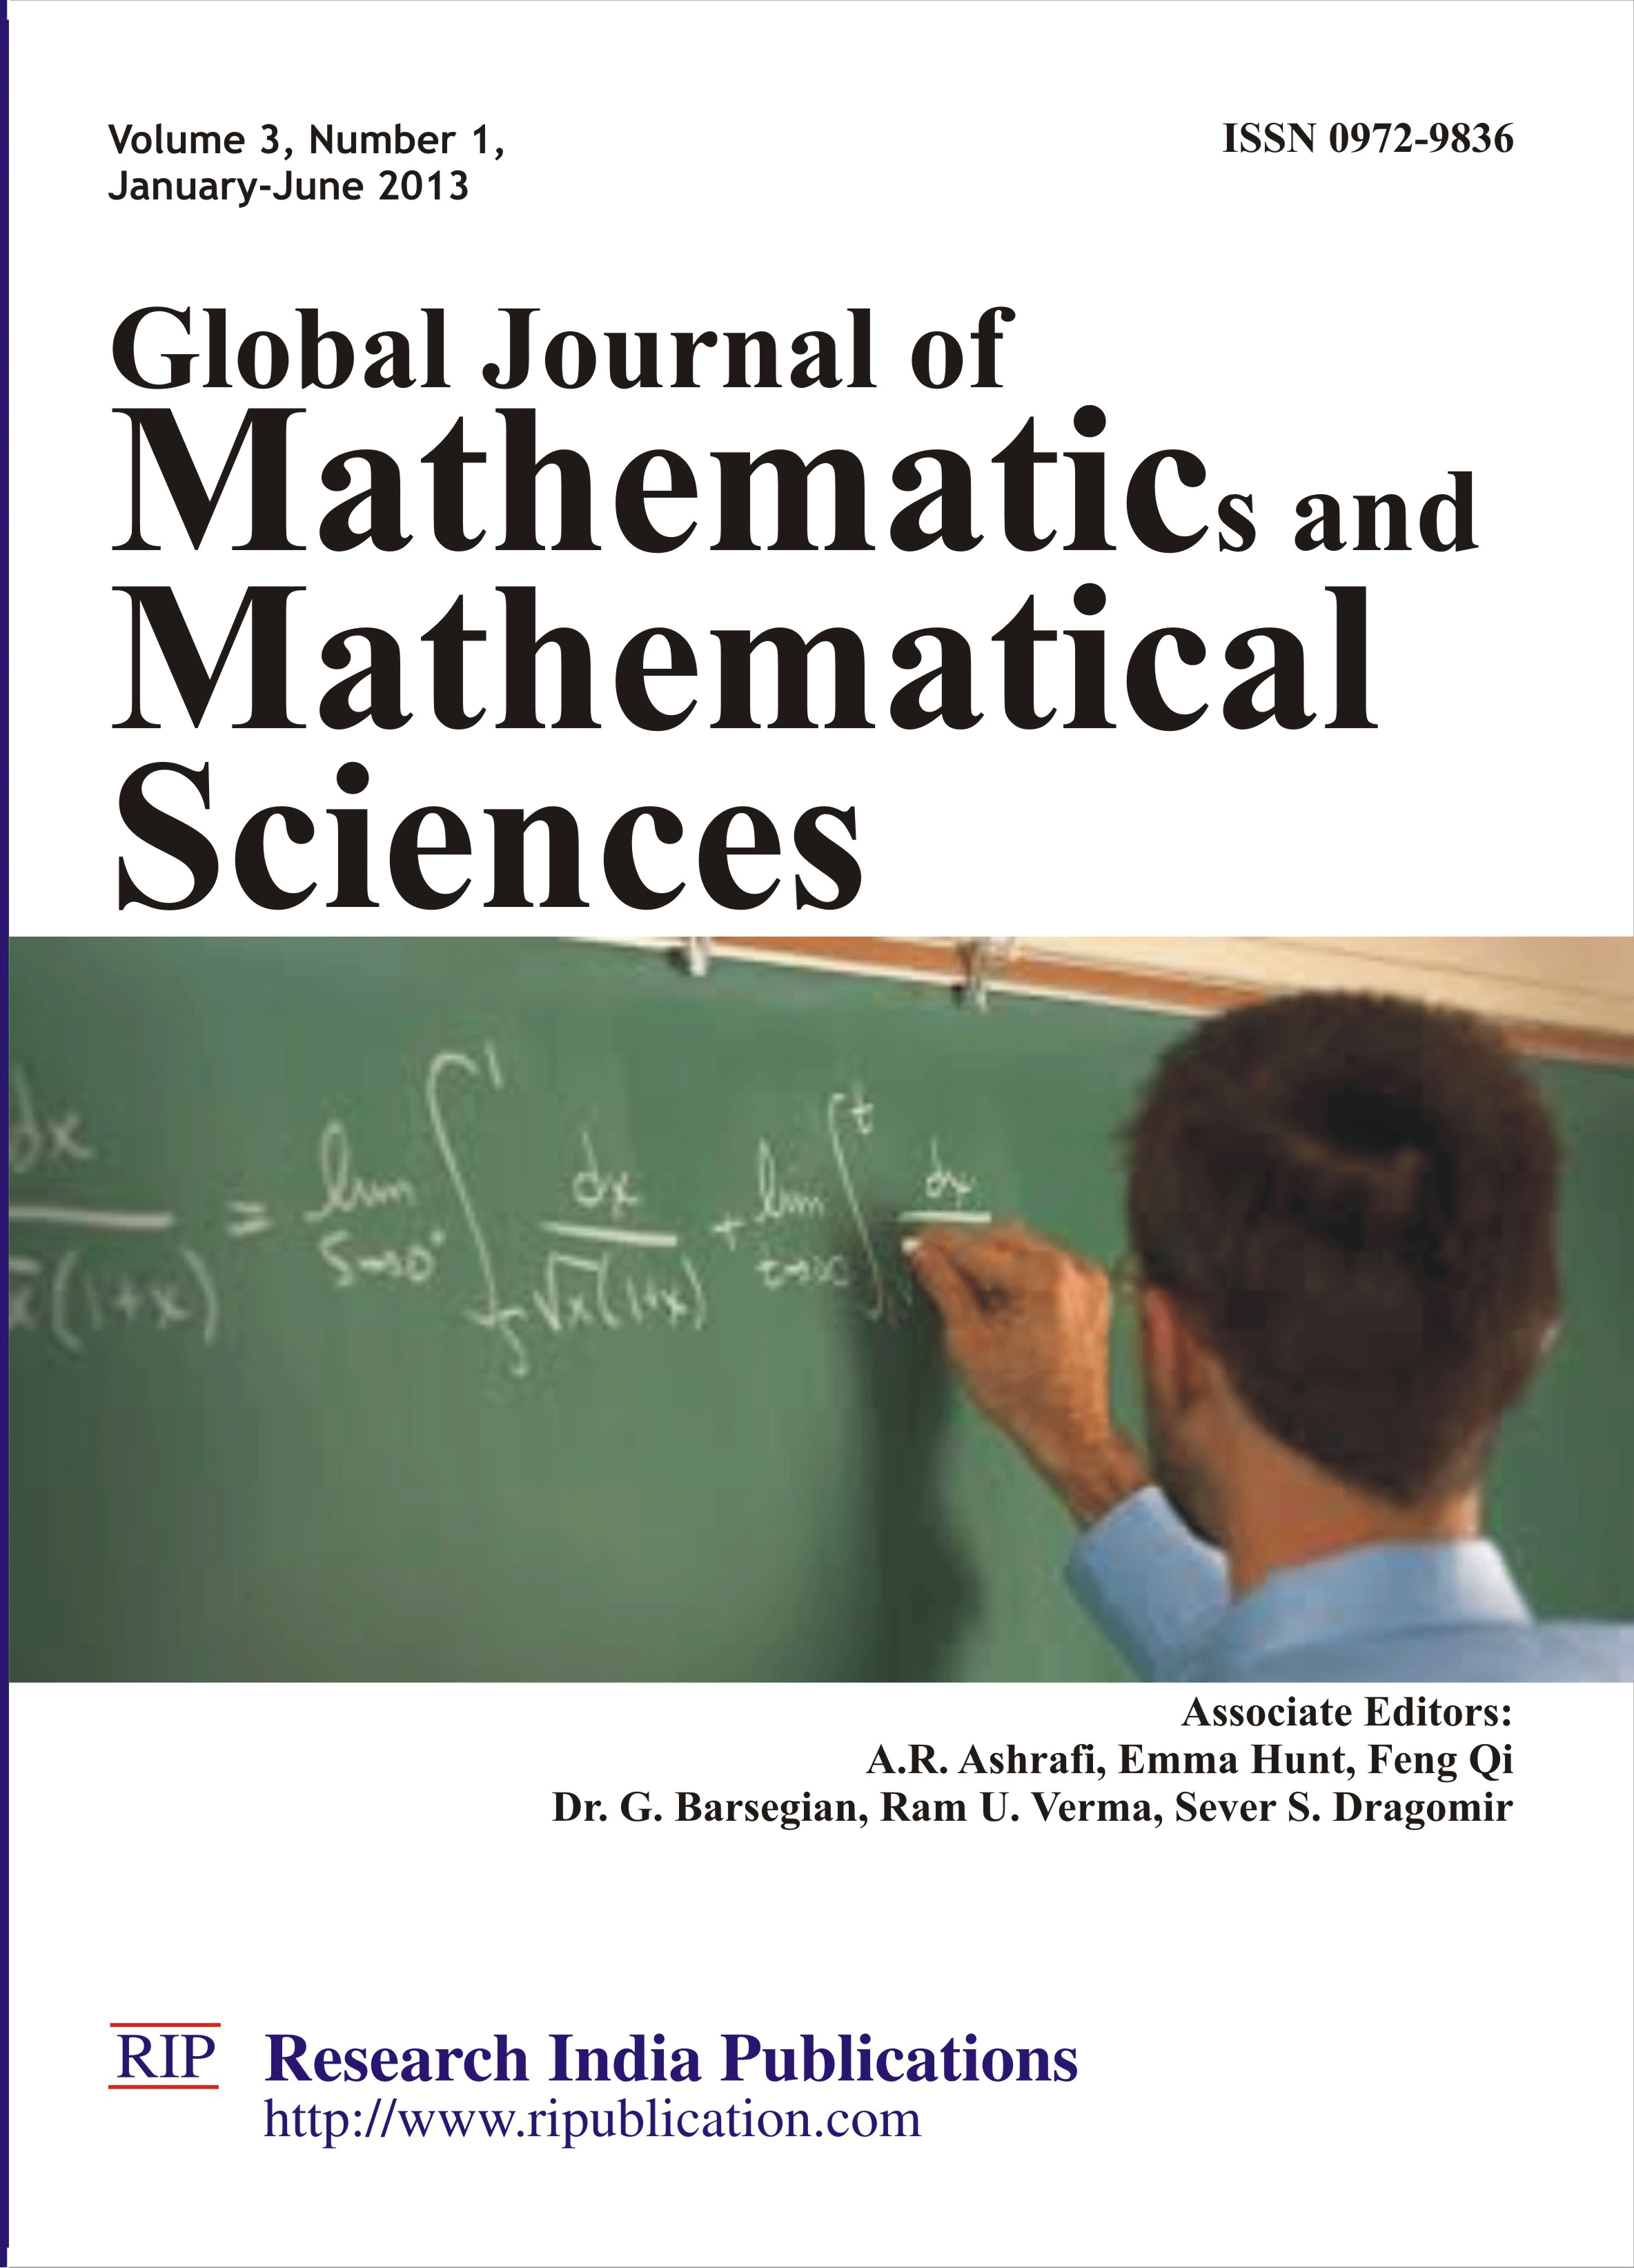 GJMMS, Global Journal of Mathematics and Mathematical Sciences